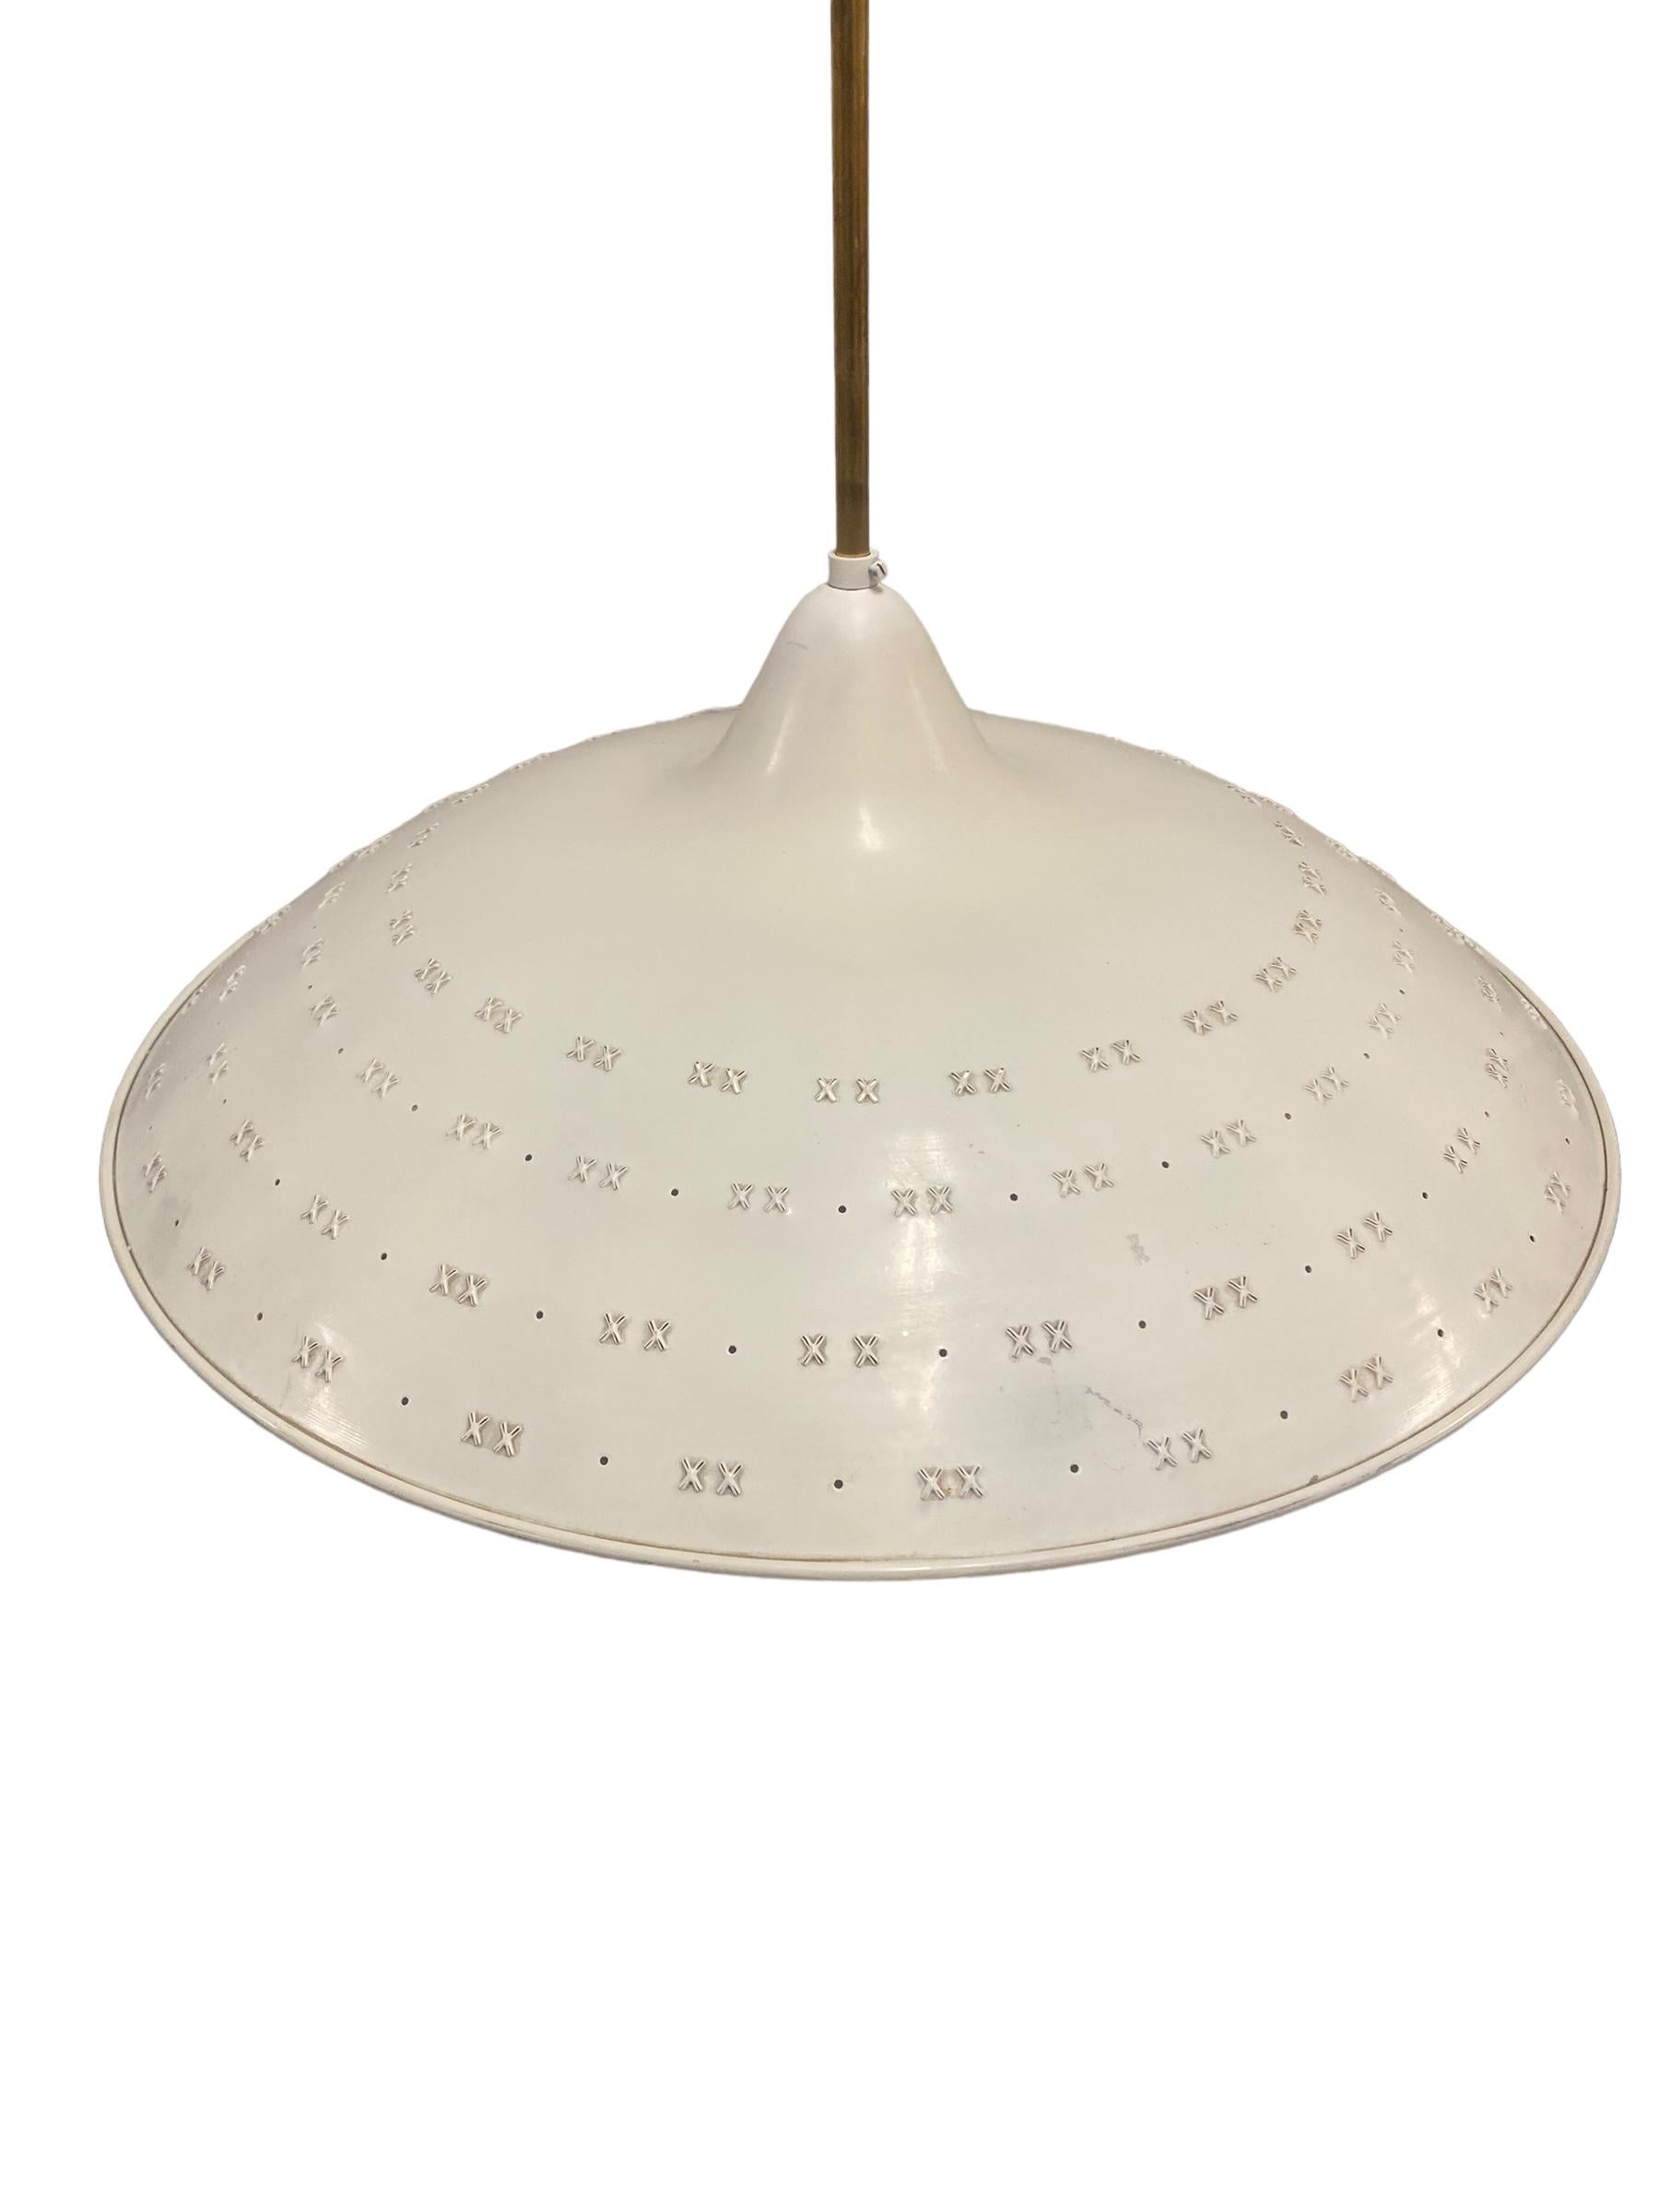 A Rare Lisa-Johansson Pape Ceiling Lamp FN 03-433, Orno 1950s 2